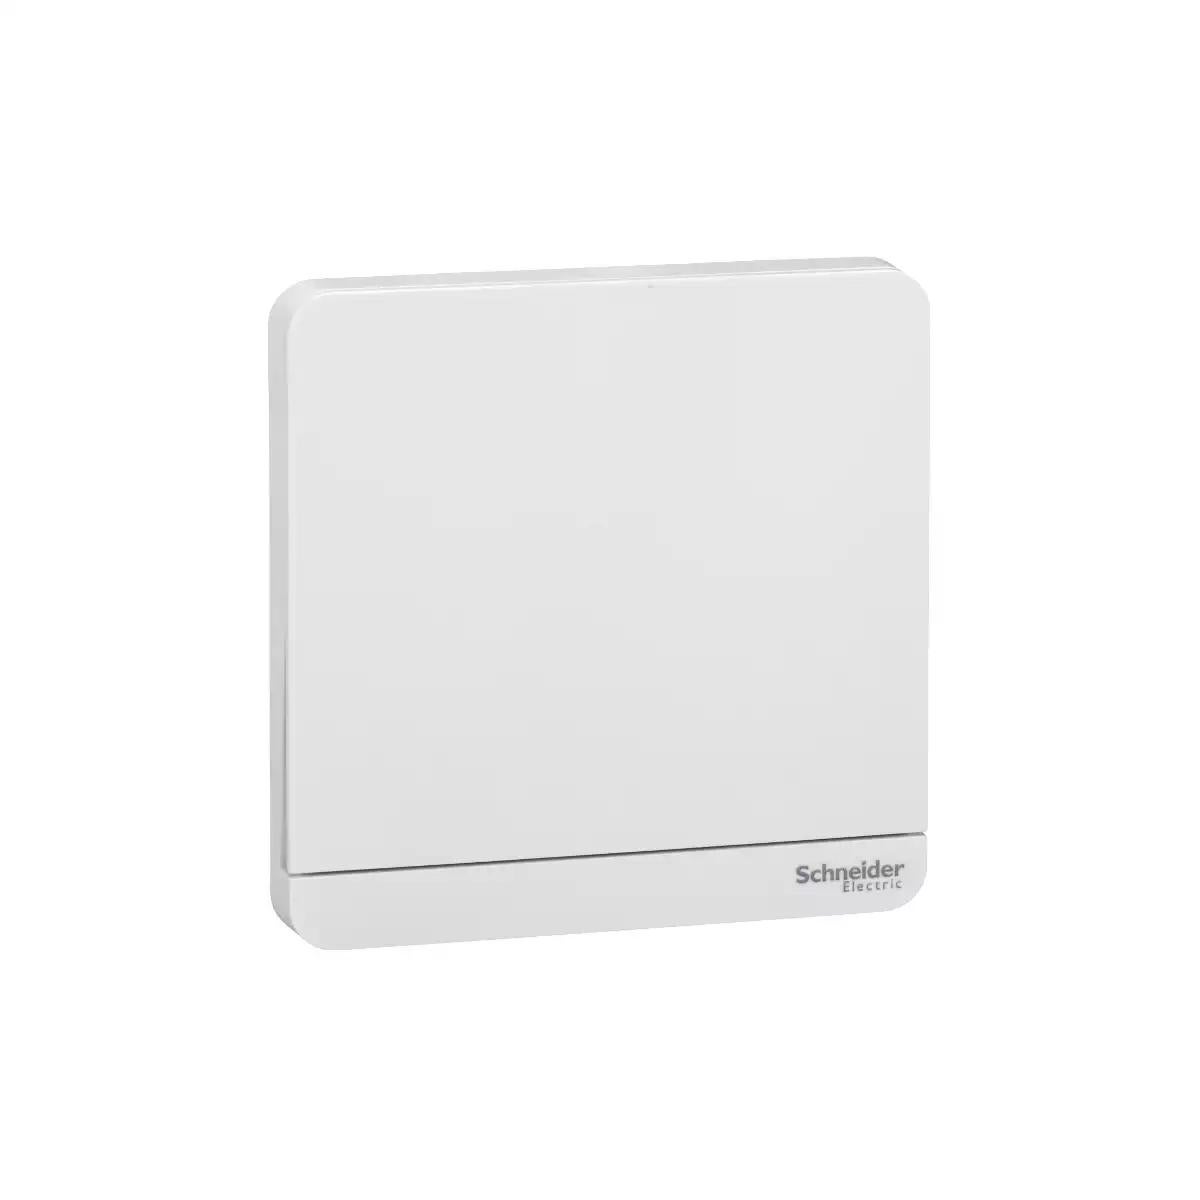 AvatarOn, time delay switch, 4 A, 250 V, White